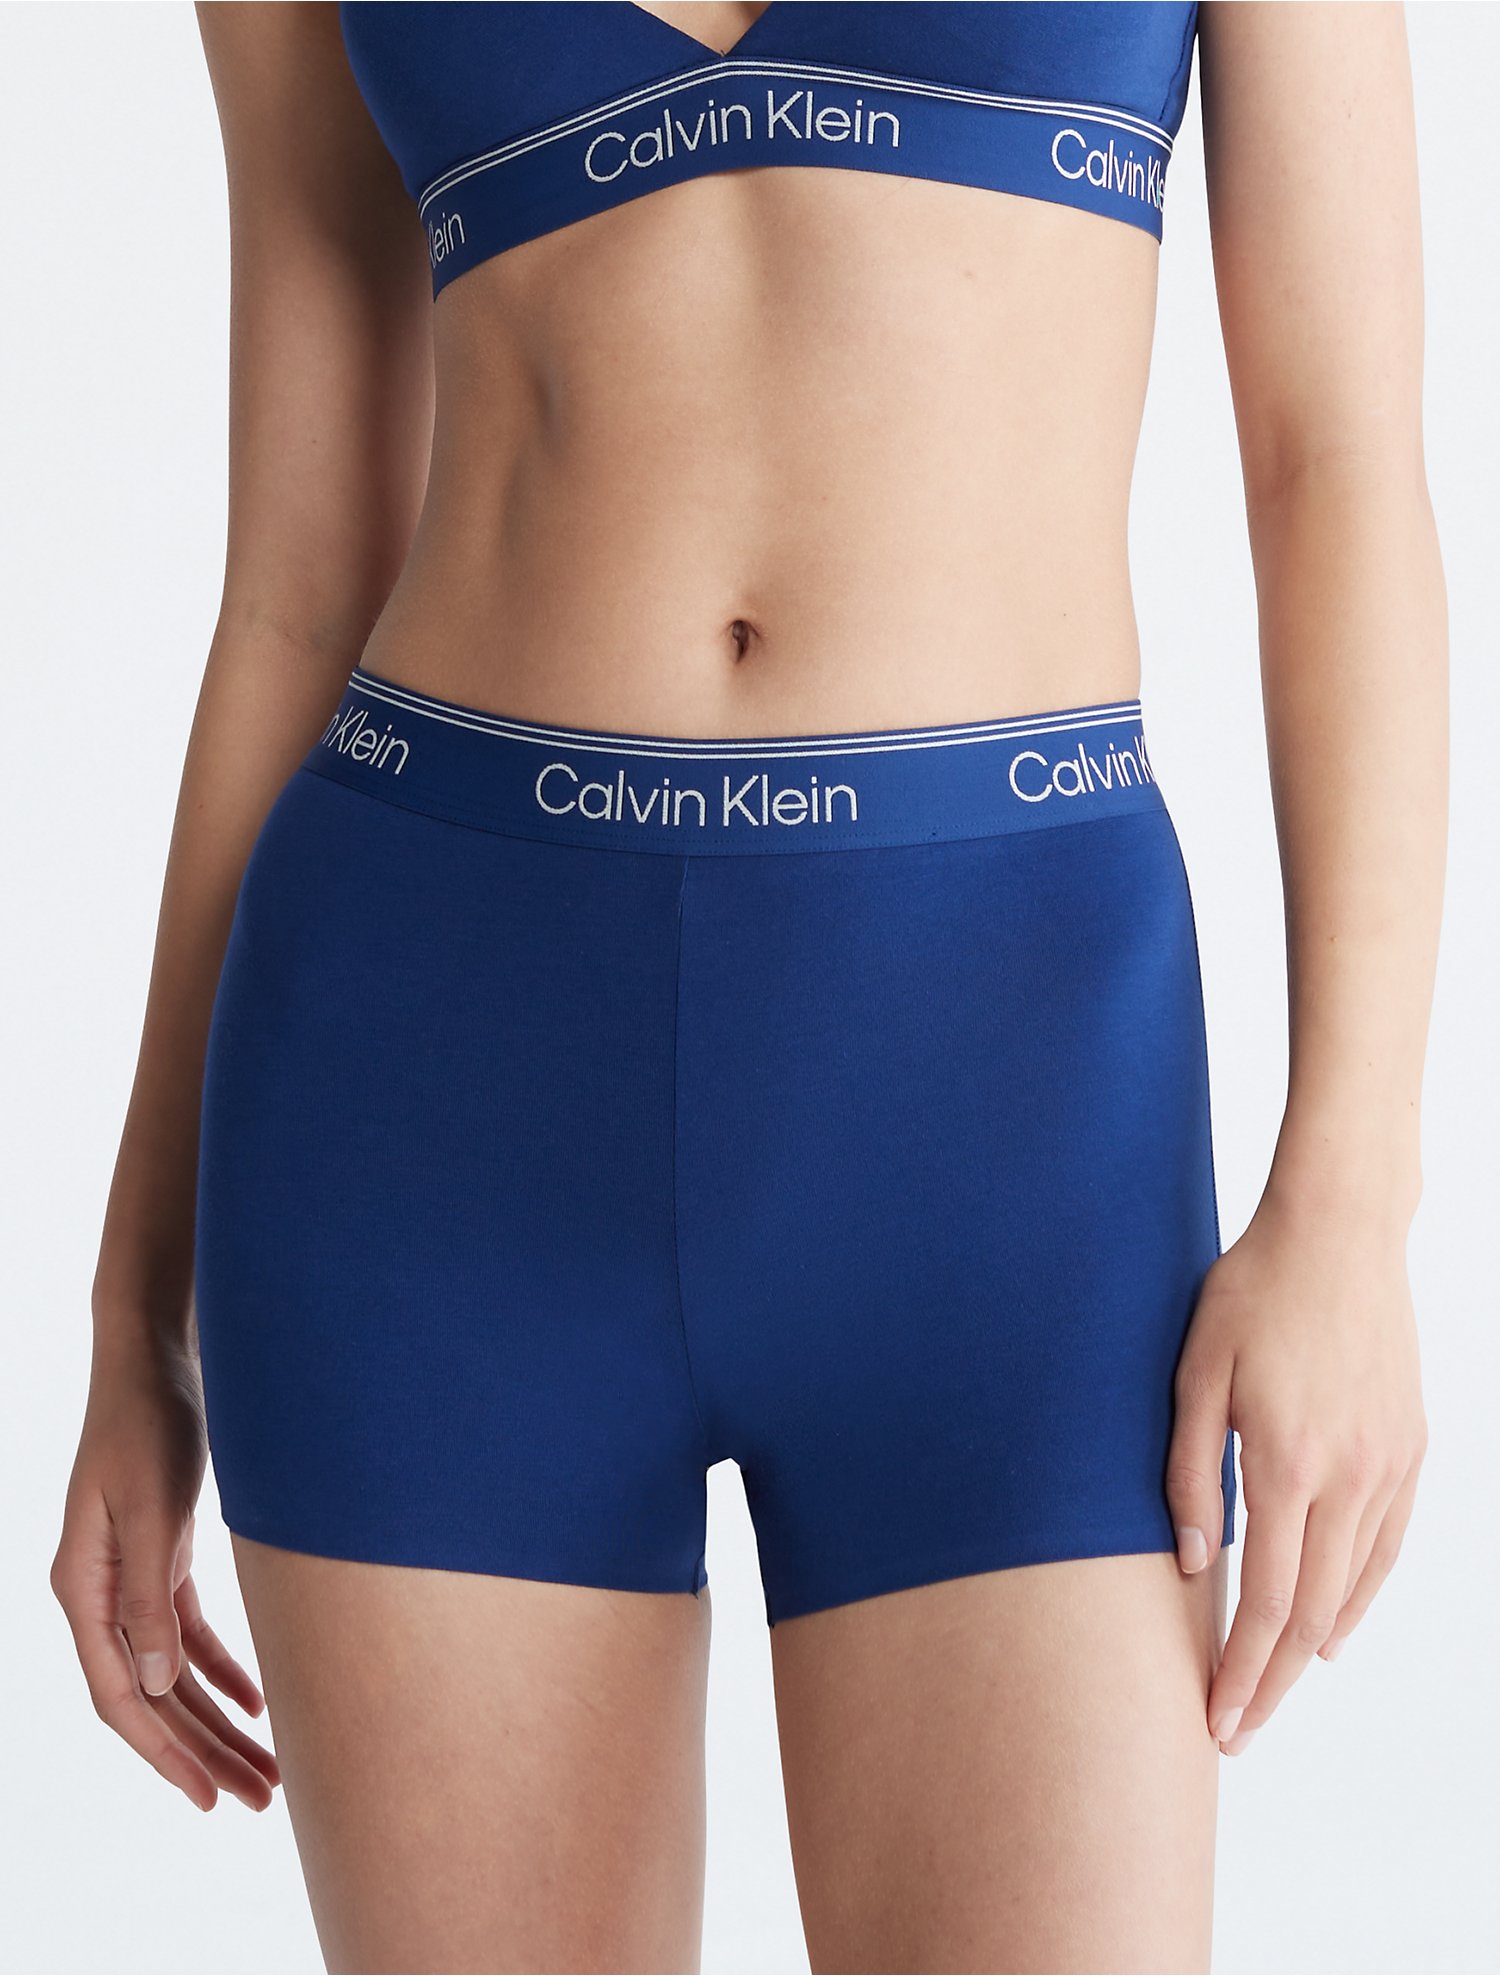 Calvin Klein Athletic Boyshorts | Calvin Klein